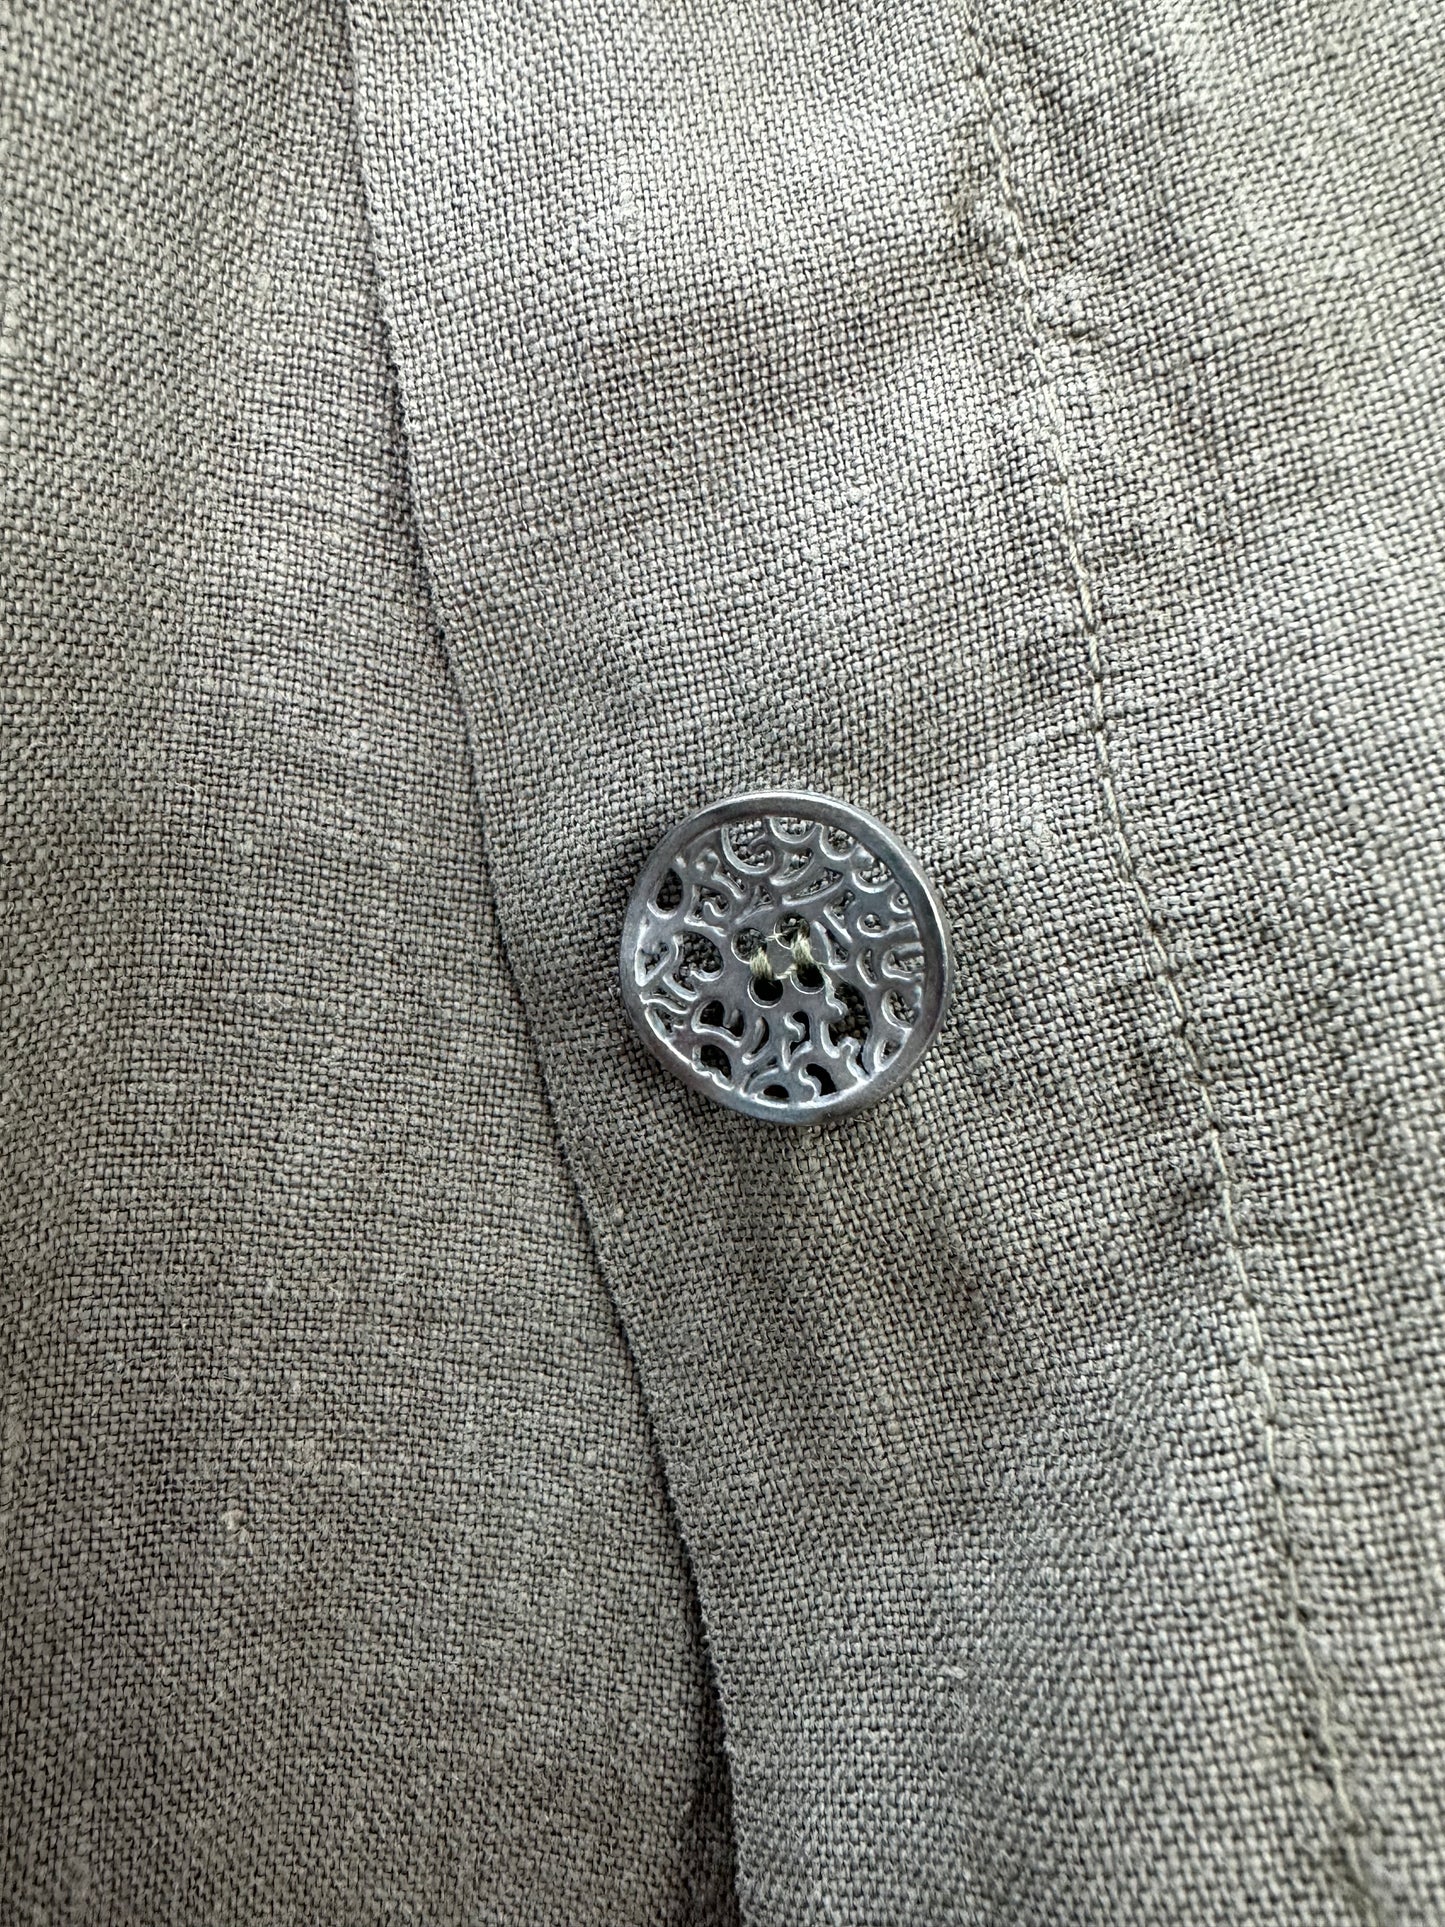 Crop Button Up Jacket - Olive